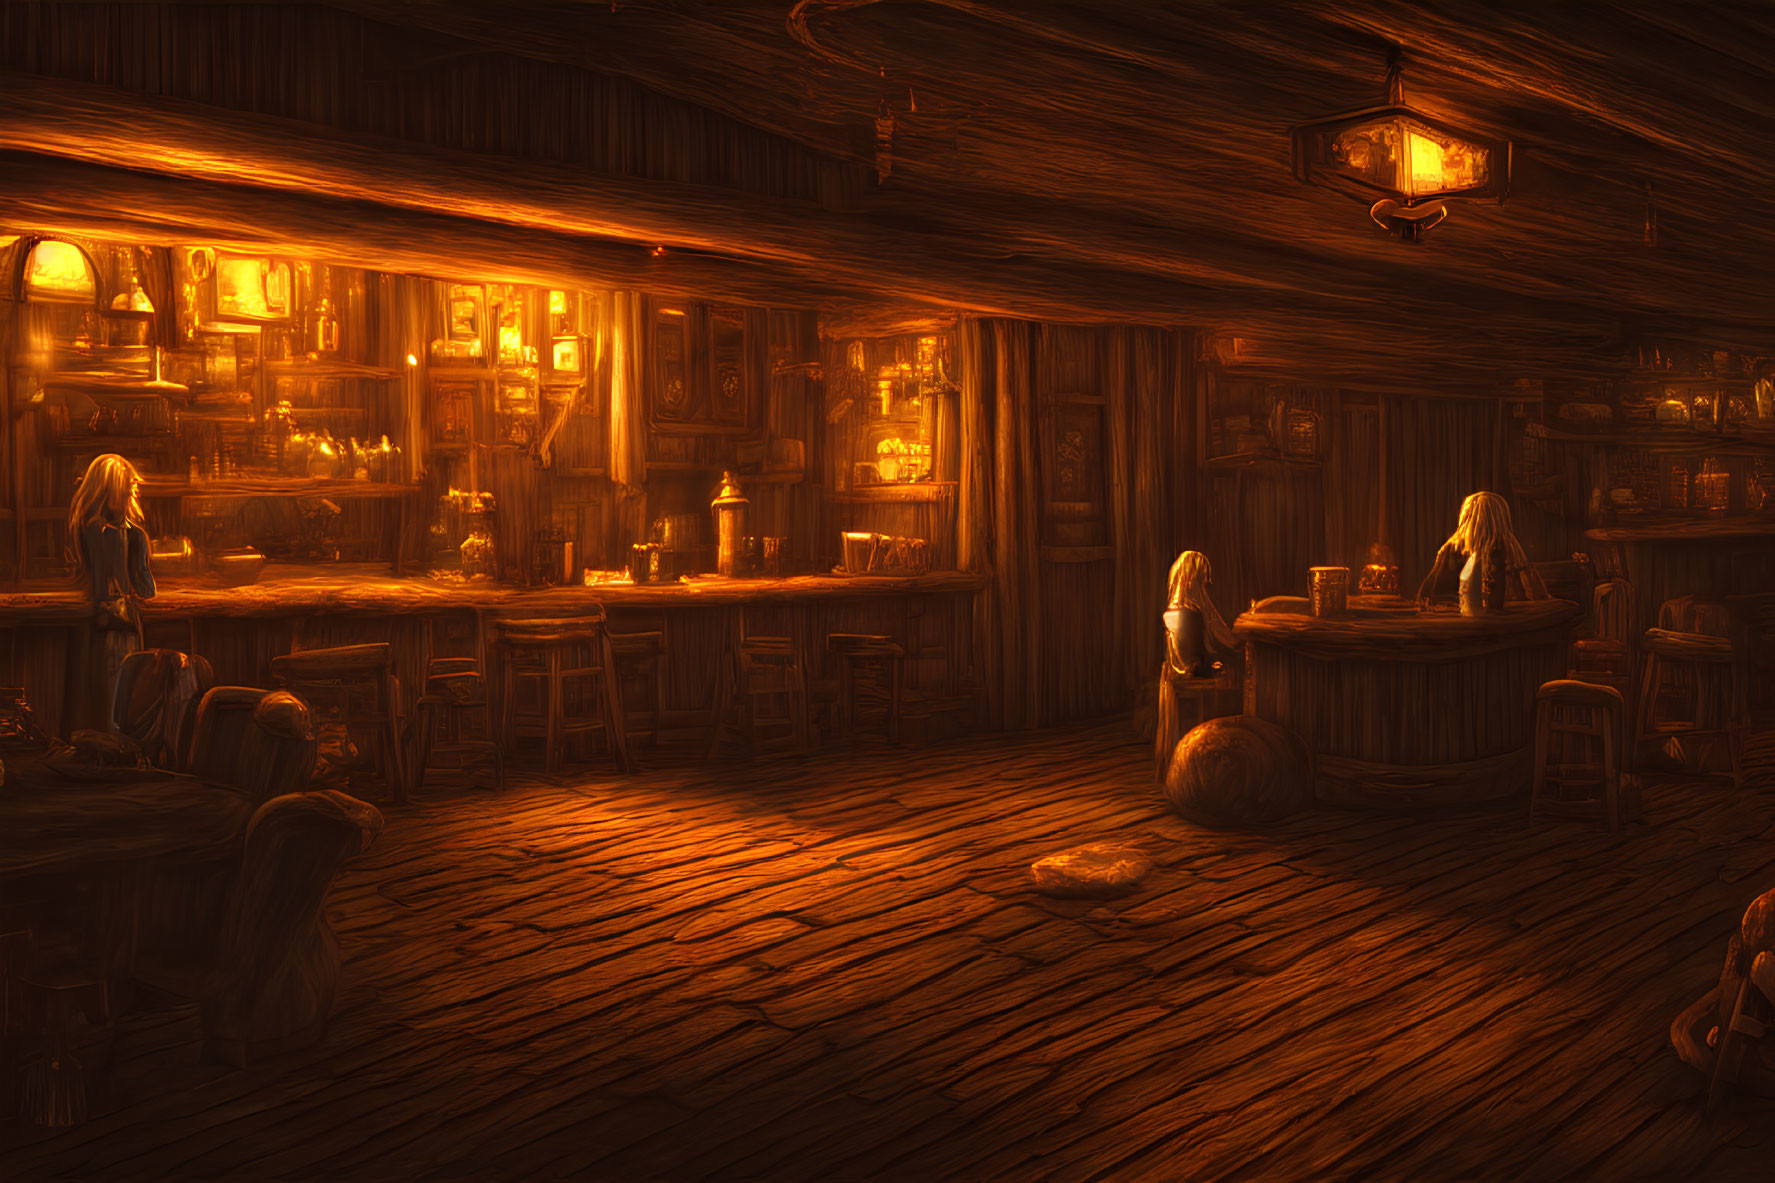 Cozy tavern interior with wooden decor and soft lantern light